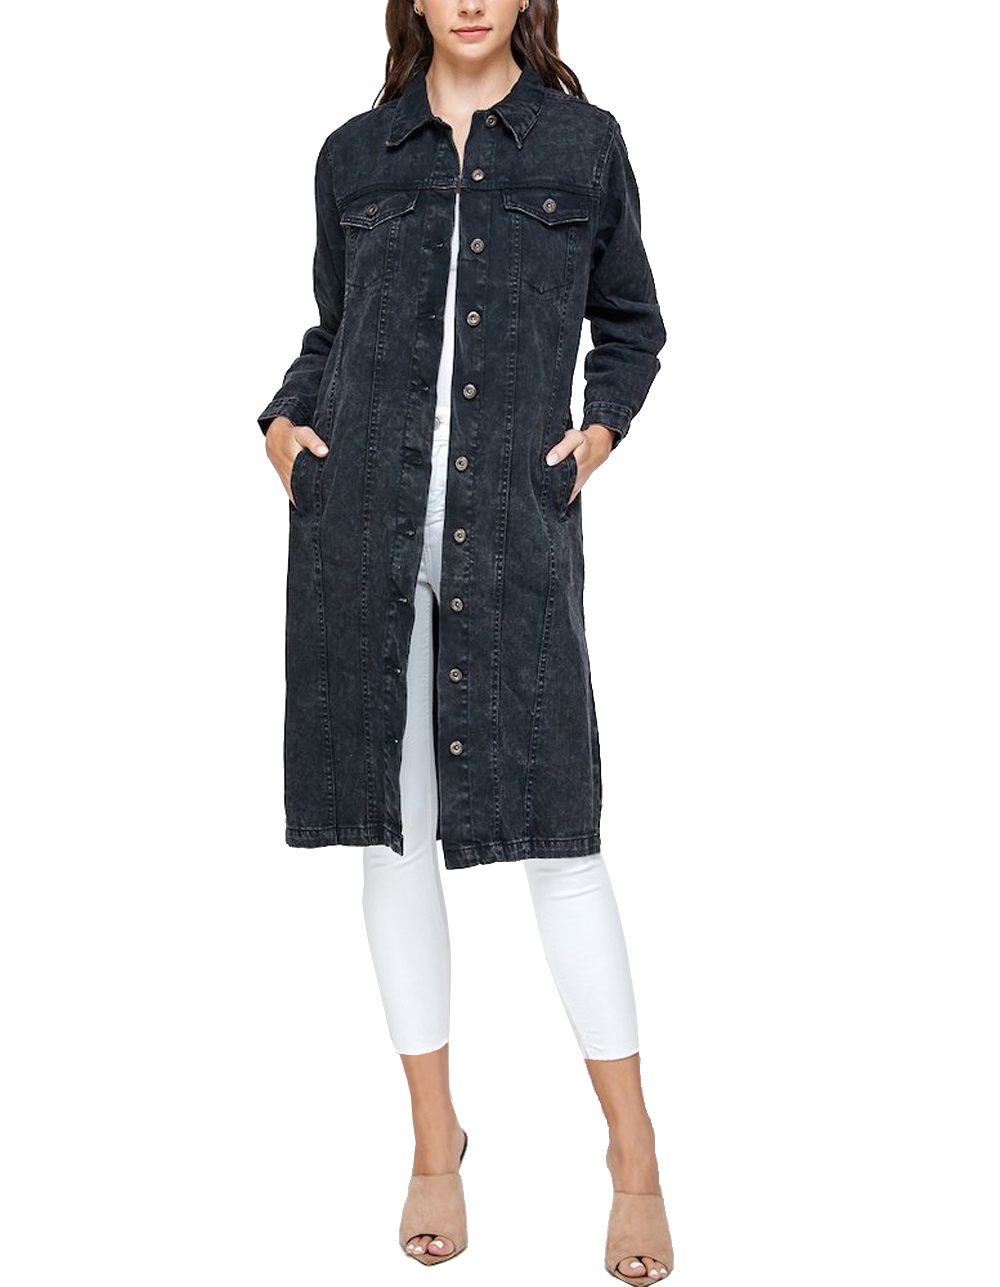 Women's Long Casual Maxi Length Denim Cotton Coat Oversize Button Up Jean Jacket (Mineral Black, M) - image 1 of 6